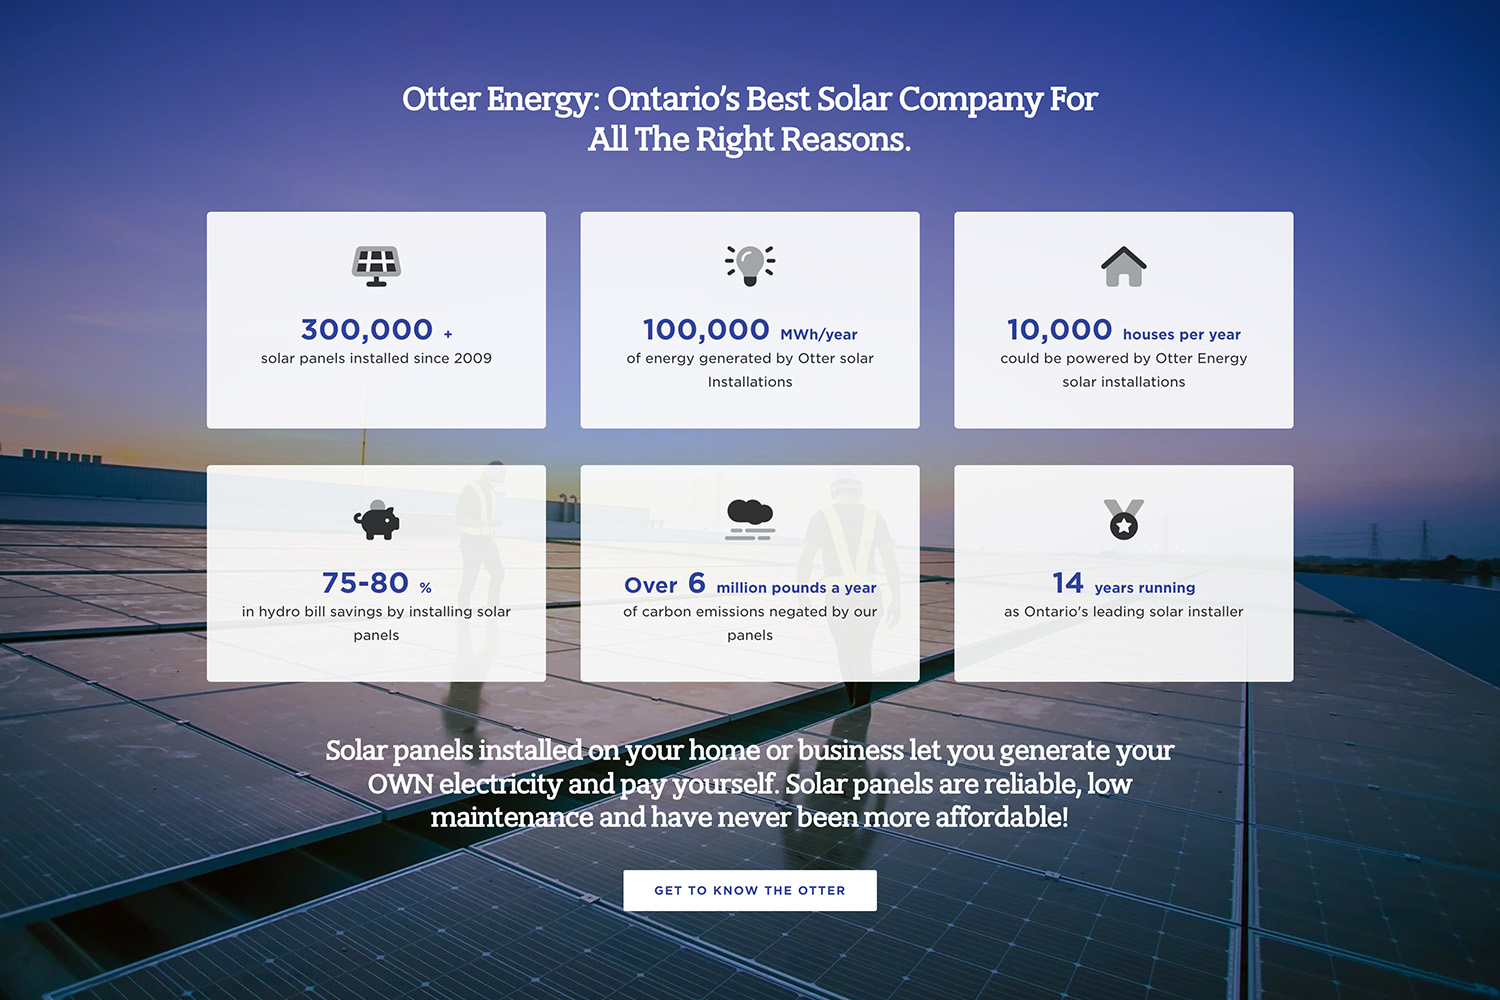 Solar Energy Company Website Screenshot